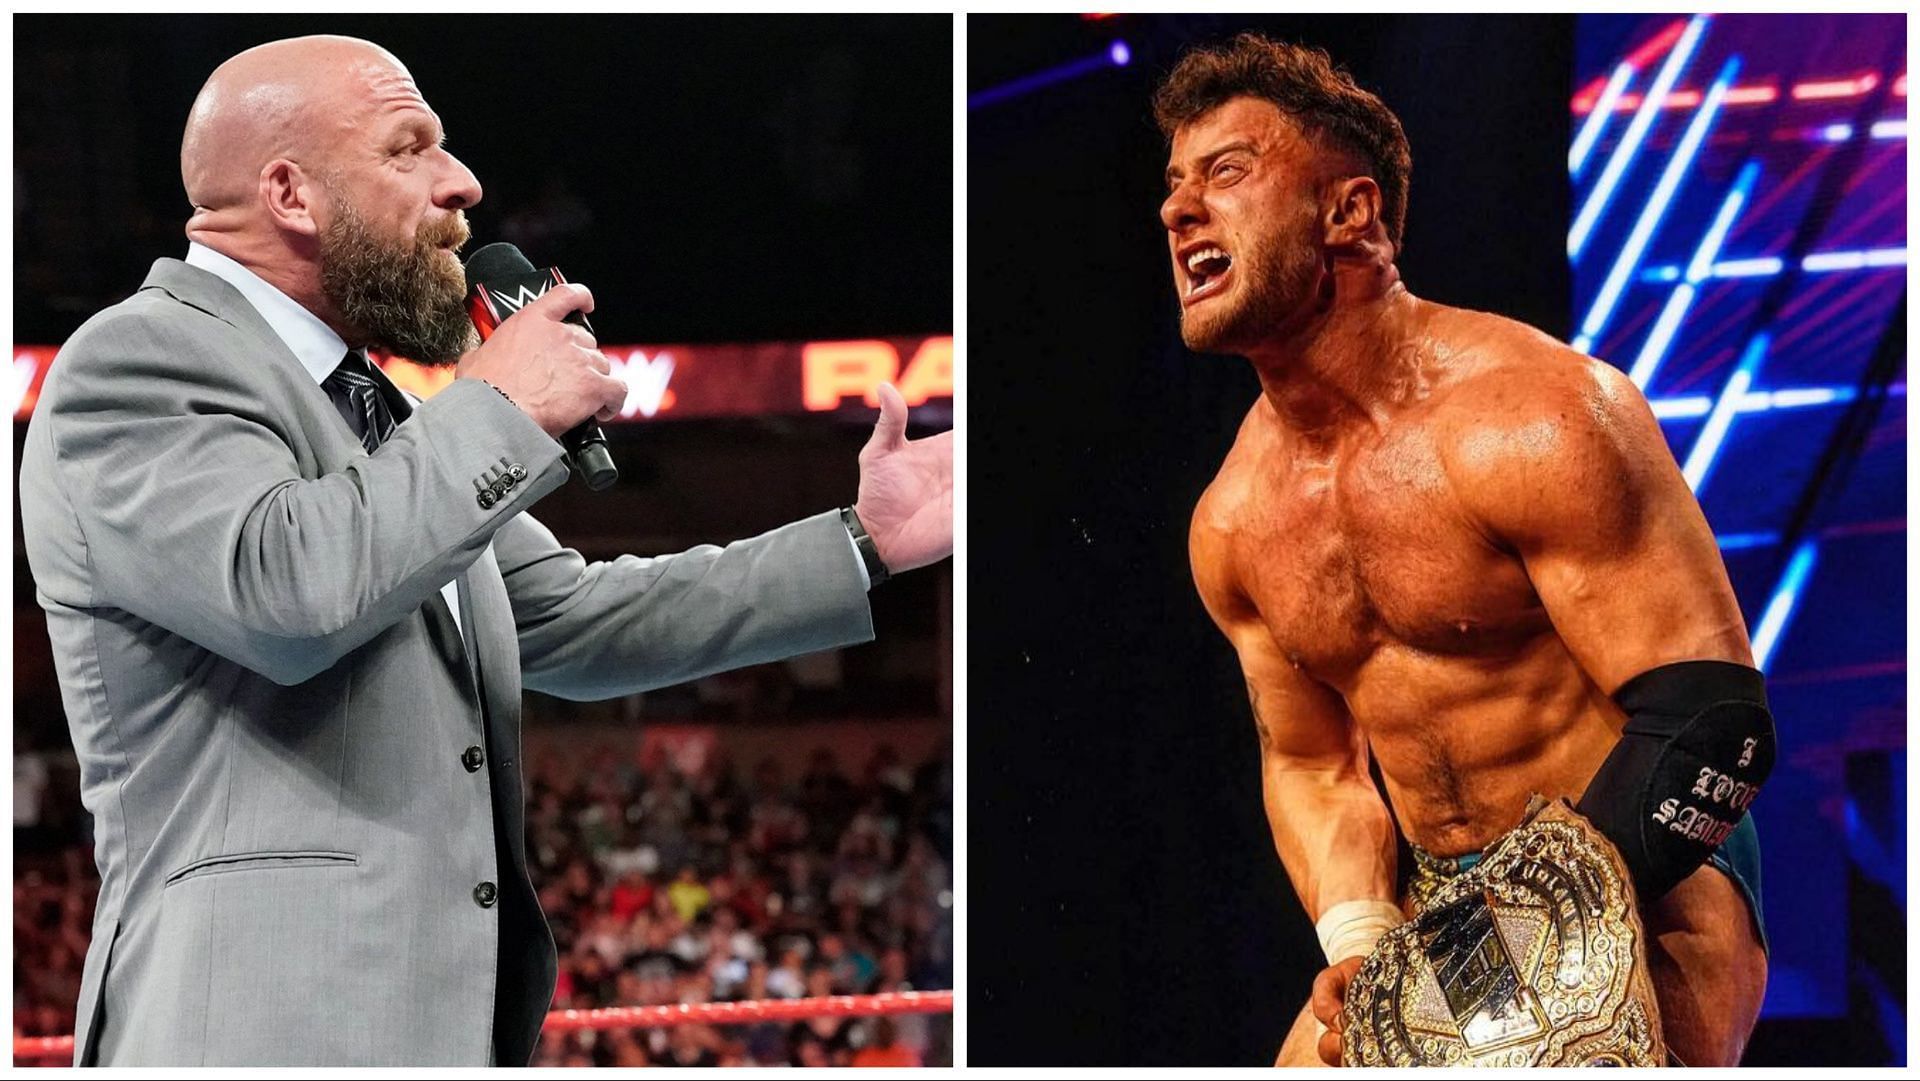 Triple H speaks on WWE RAW, MJF yells out on AEW Dynamite